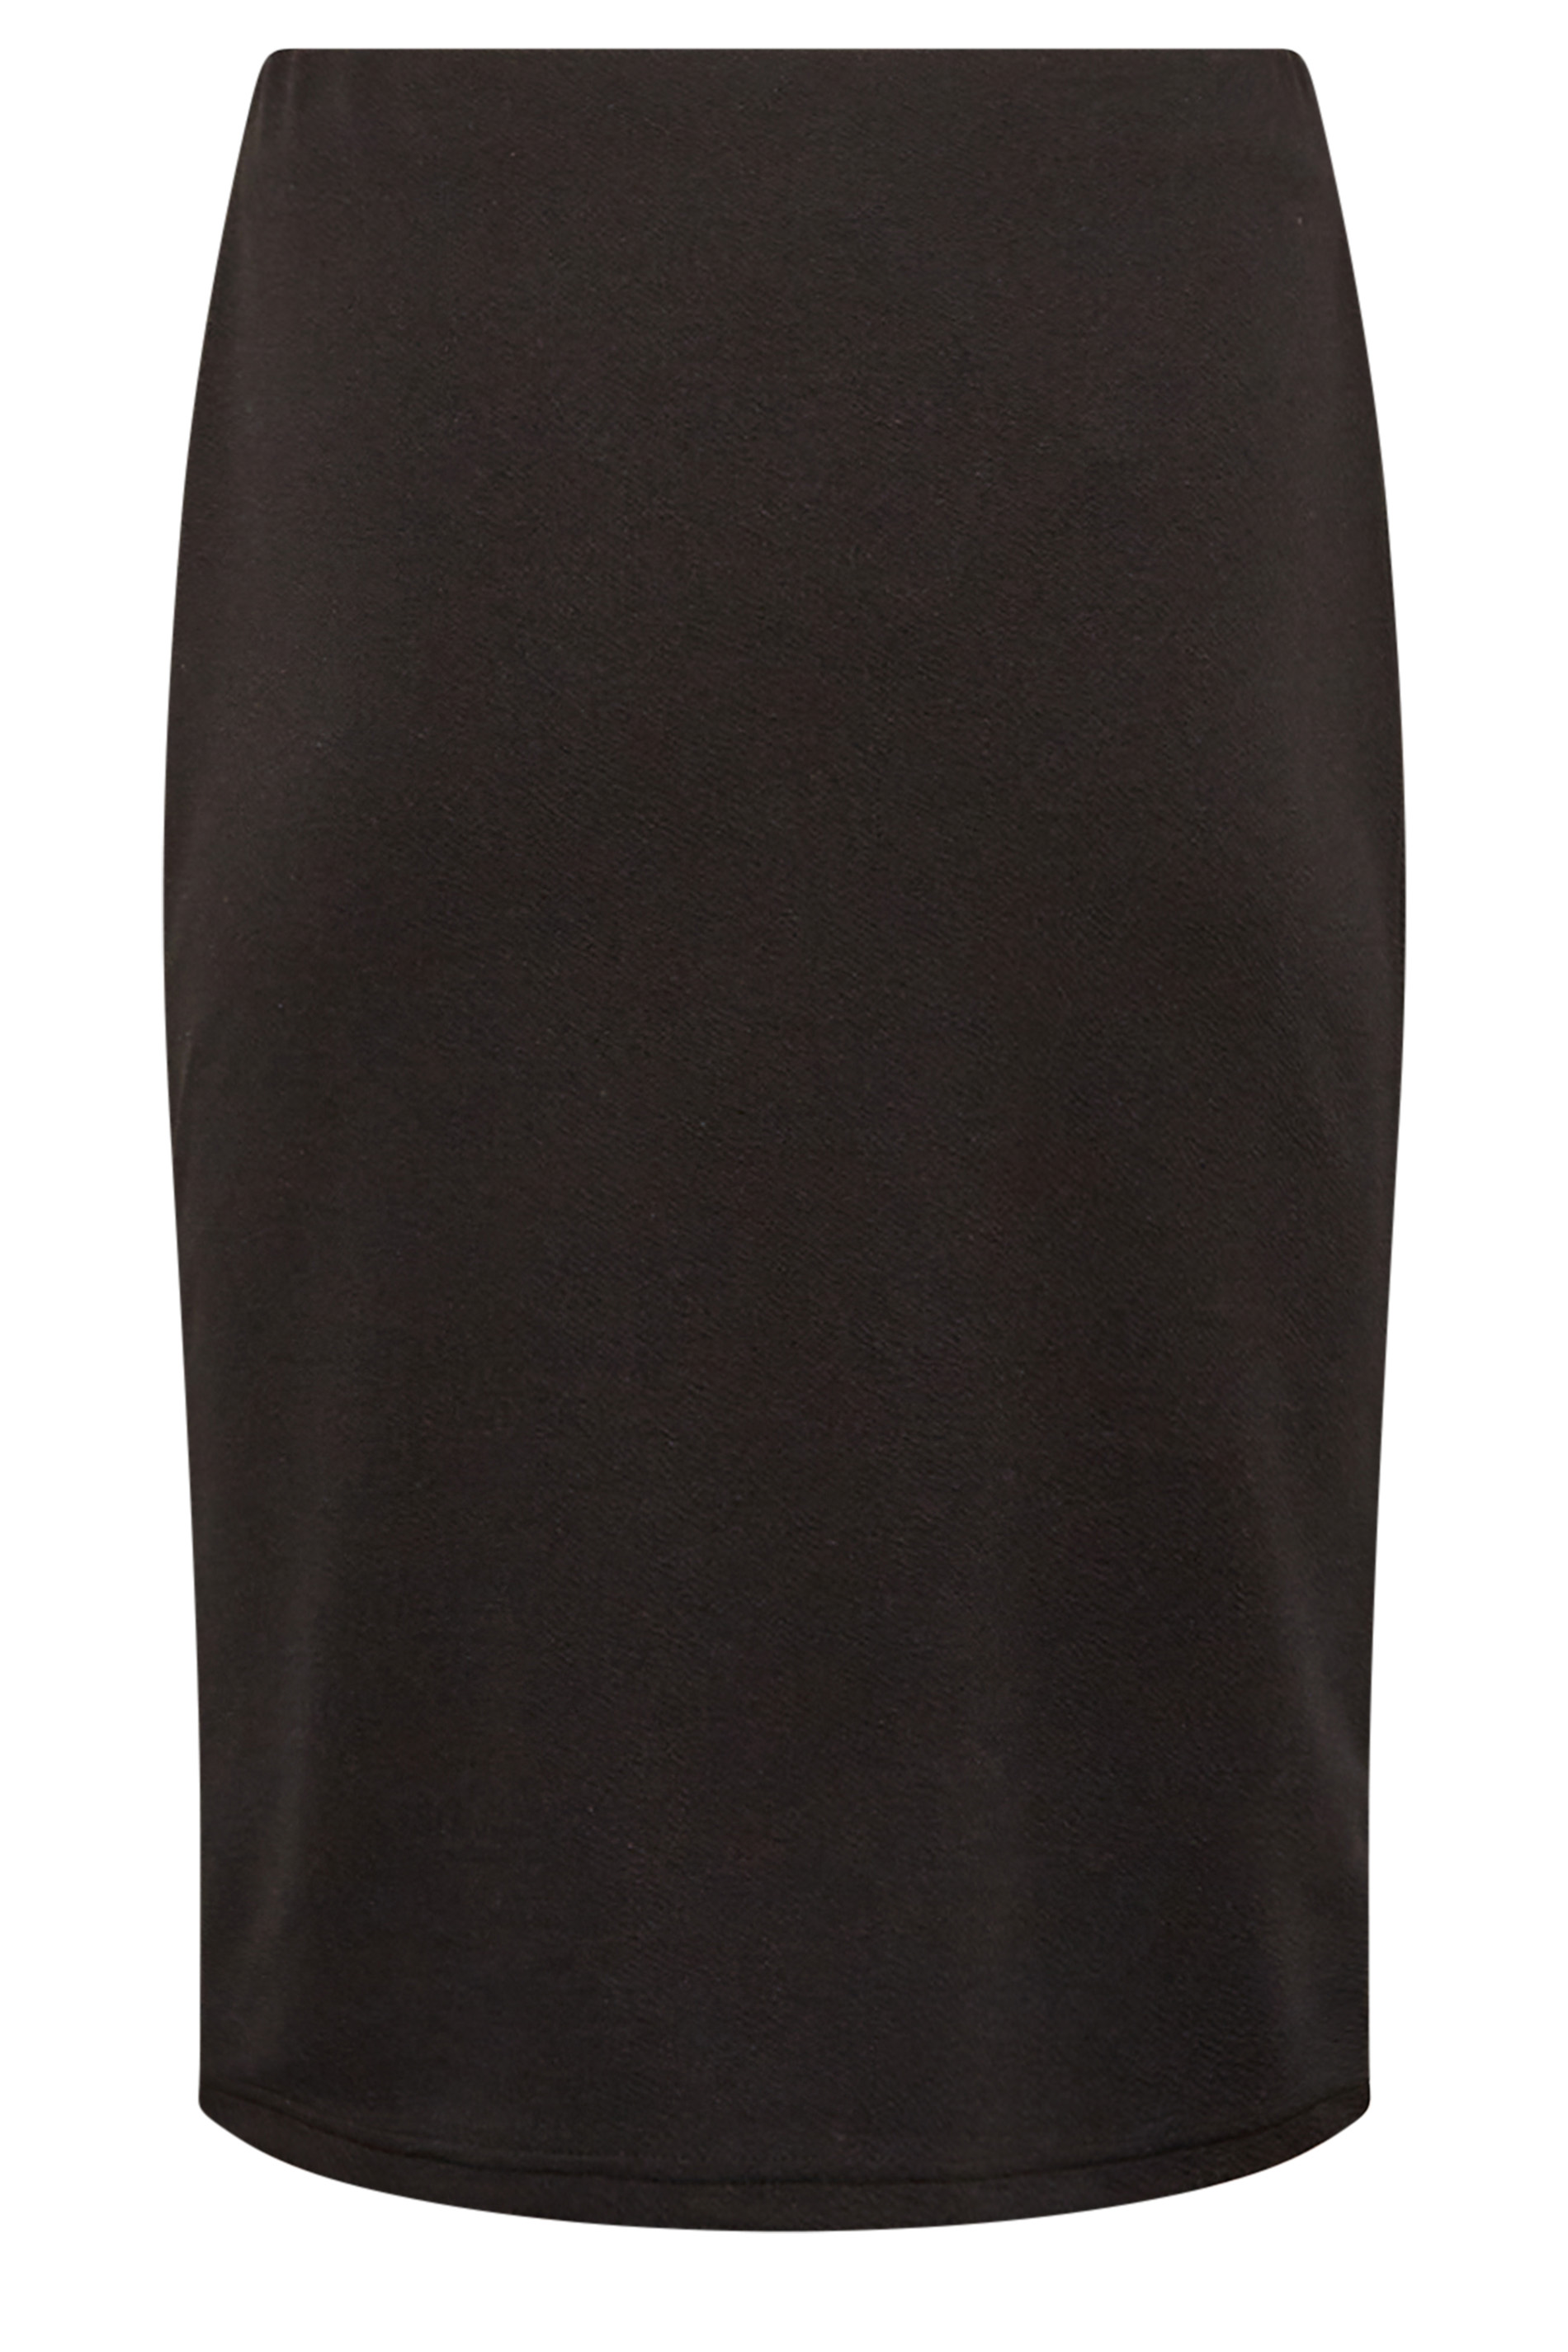 Petite Black Midi Pencil Skirt | PixieGirl 1